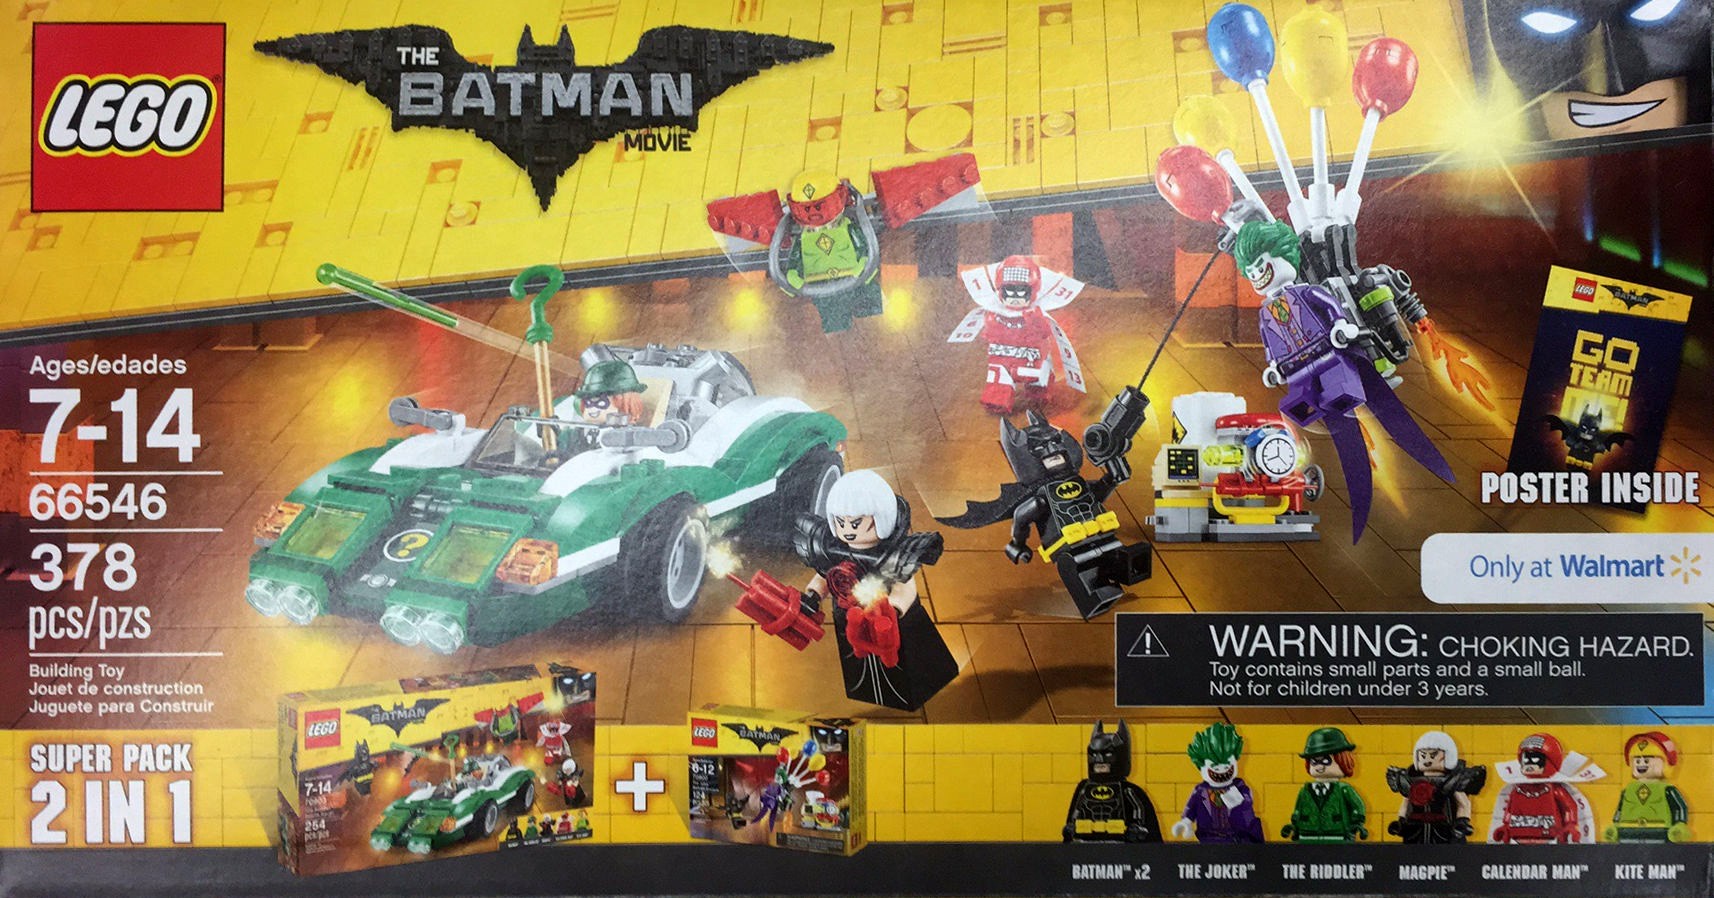 The LEGO Batman Movie Super Pack 2-in-1 - The LEGO Batman Movie